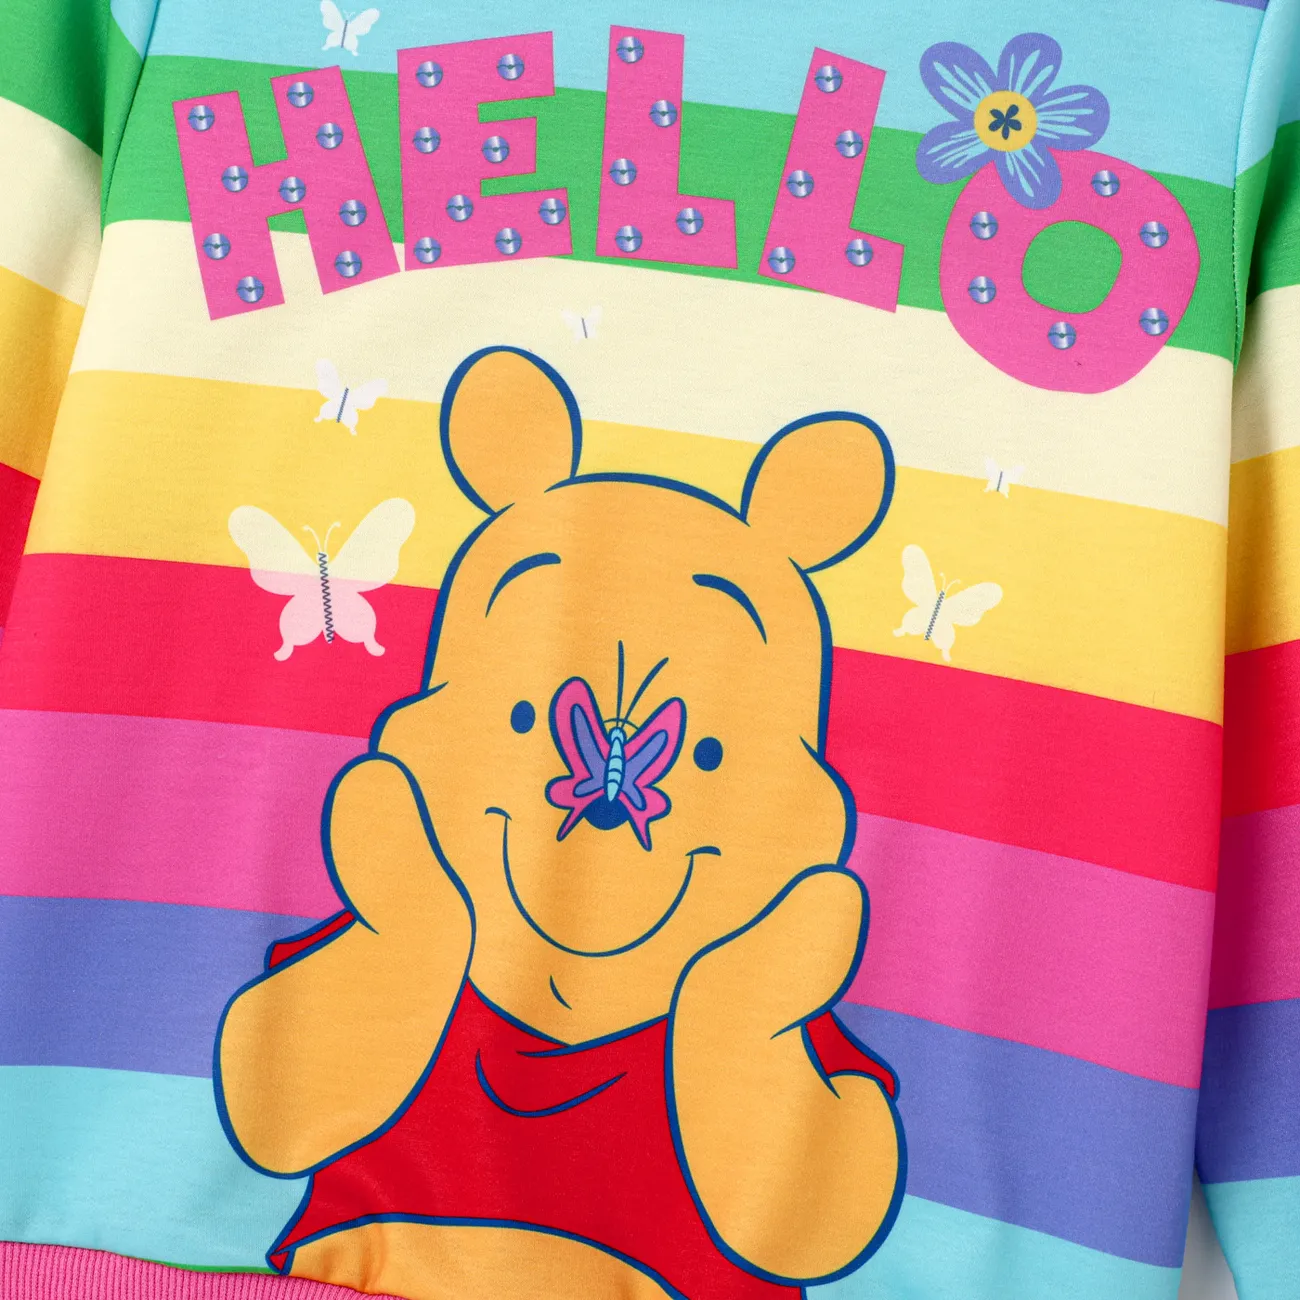 Disney Winnie the Pooh Kid Girl Character Print Long-sleeve Sweatshirt Multi-color big image 1